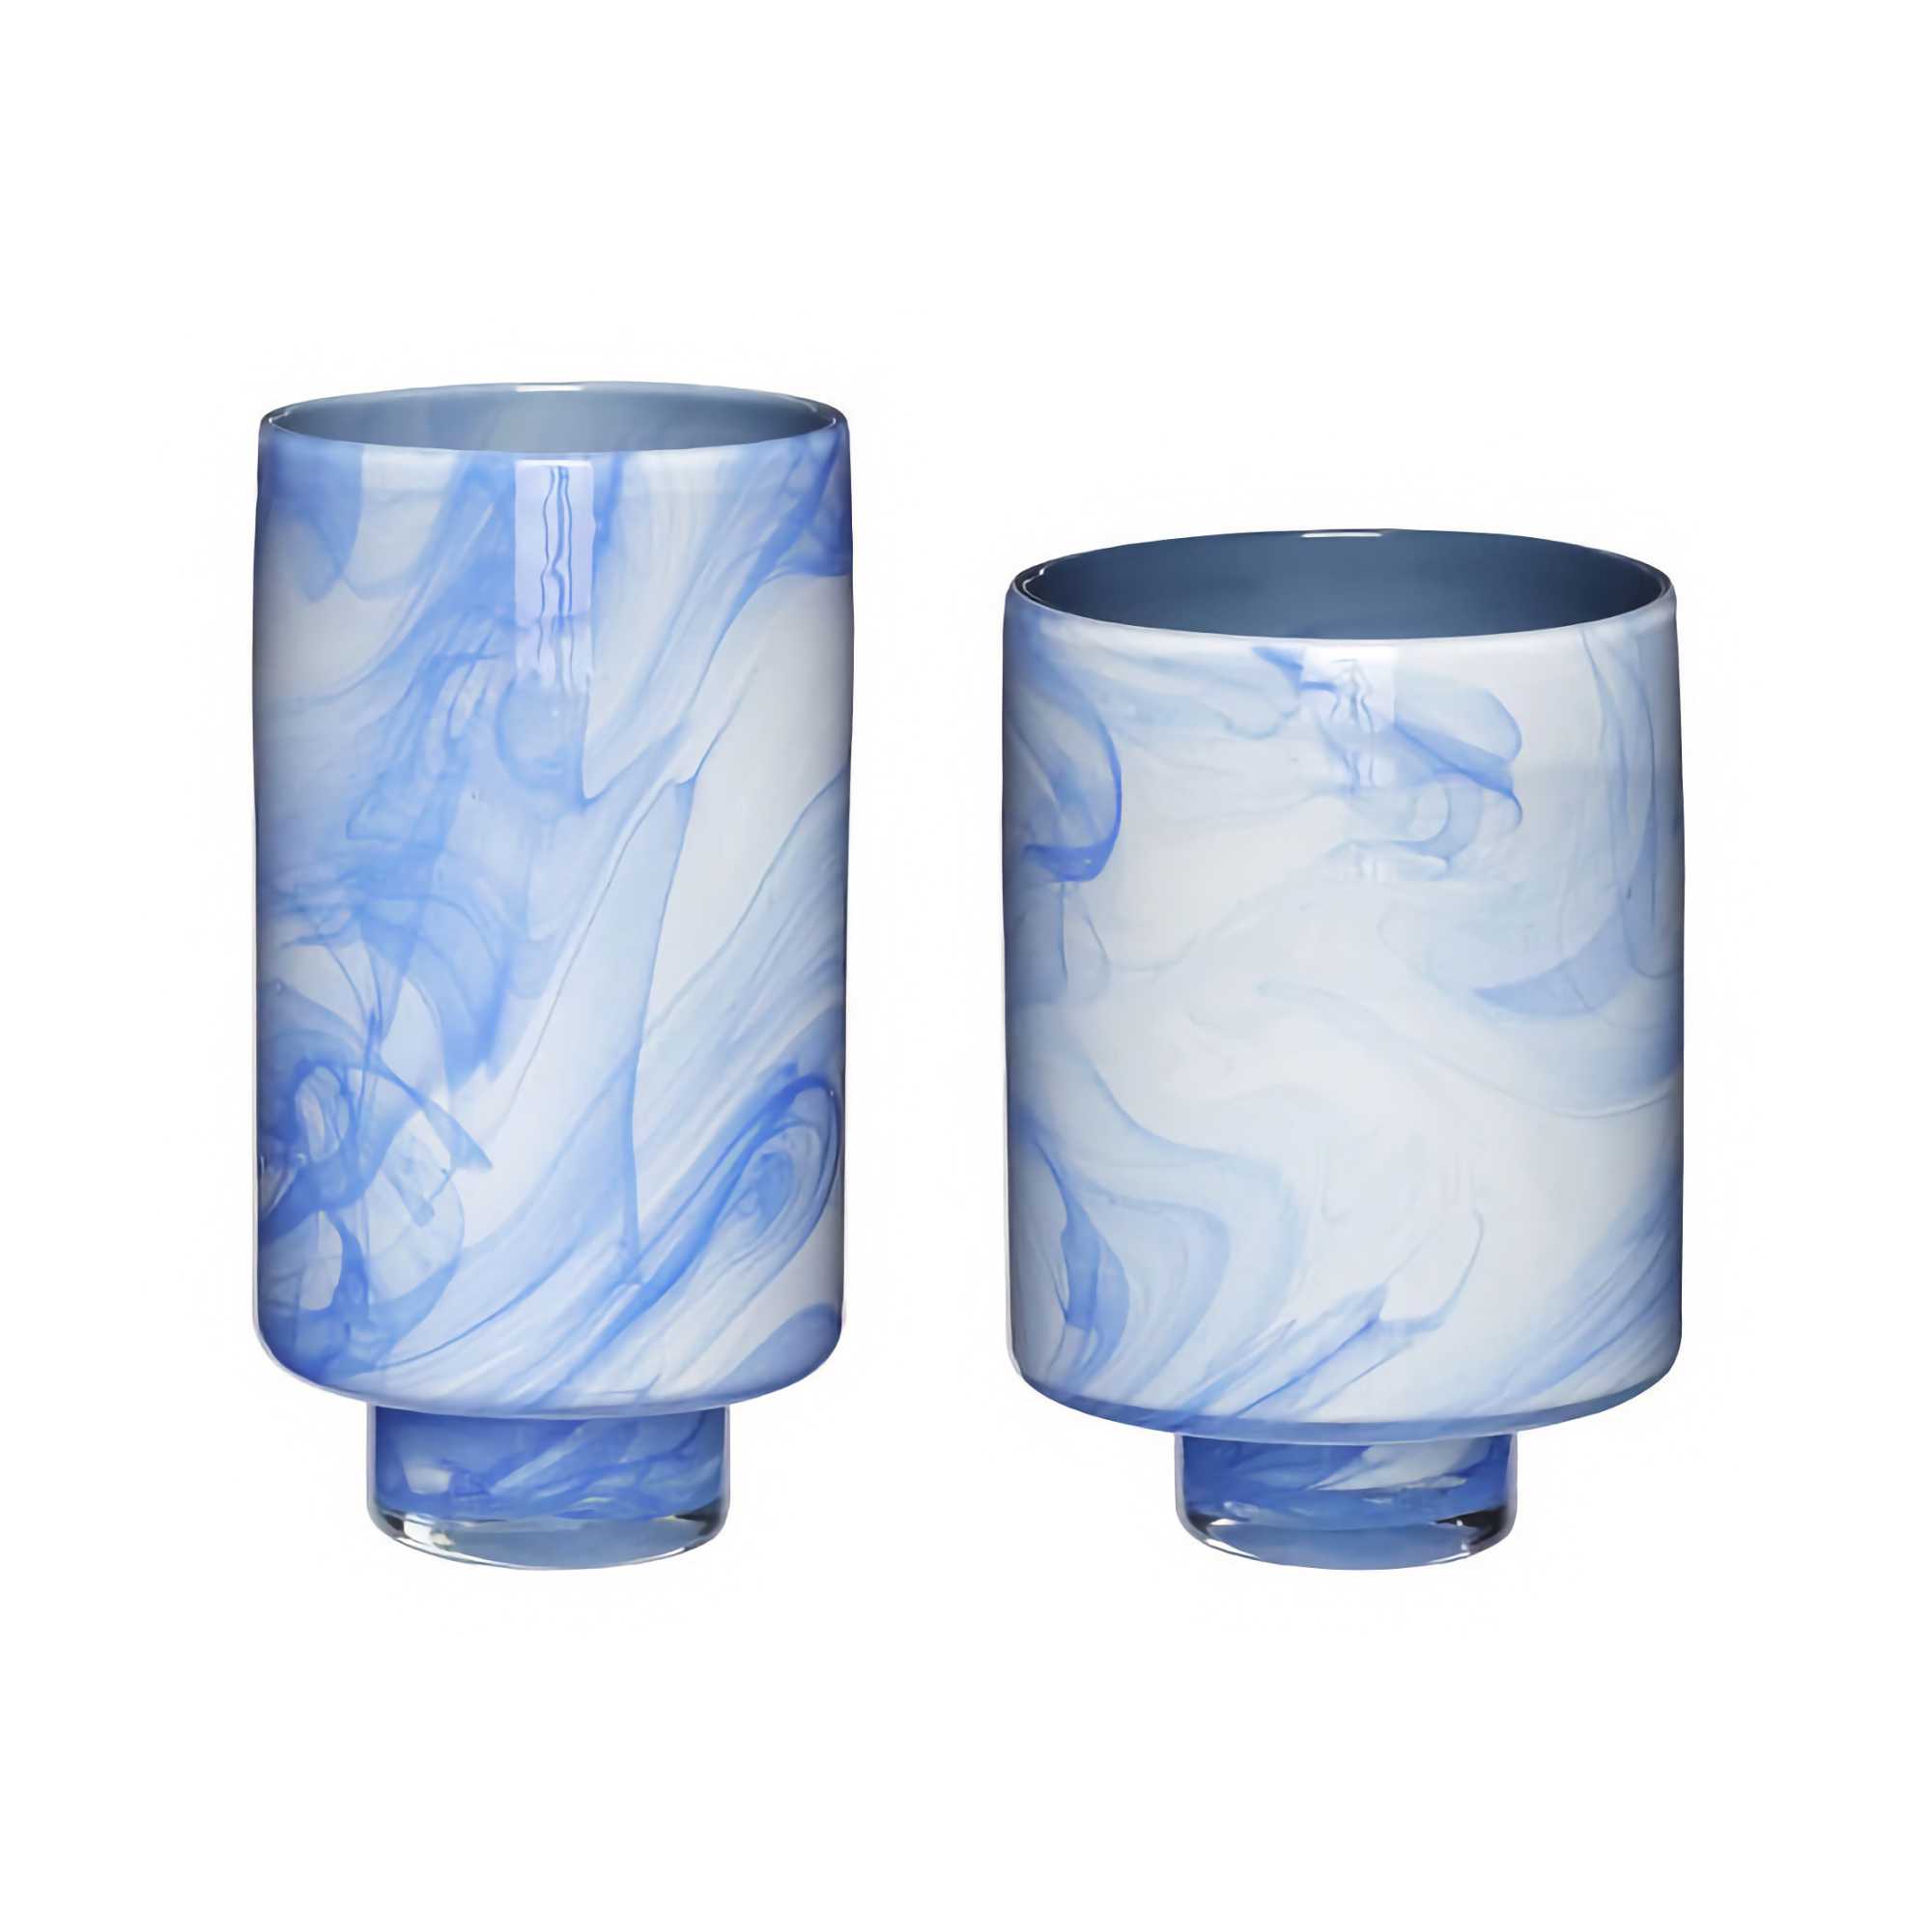 Hubsch Cloud Vases Set of 2, Blue/White